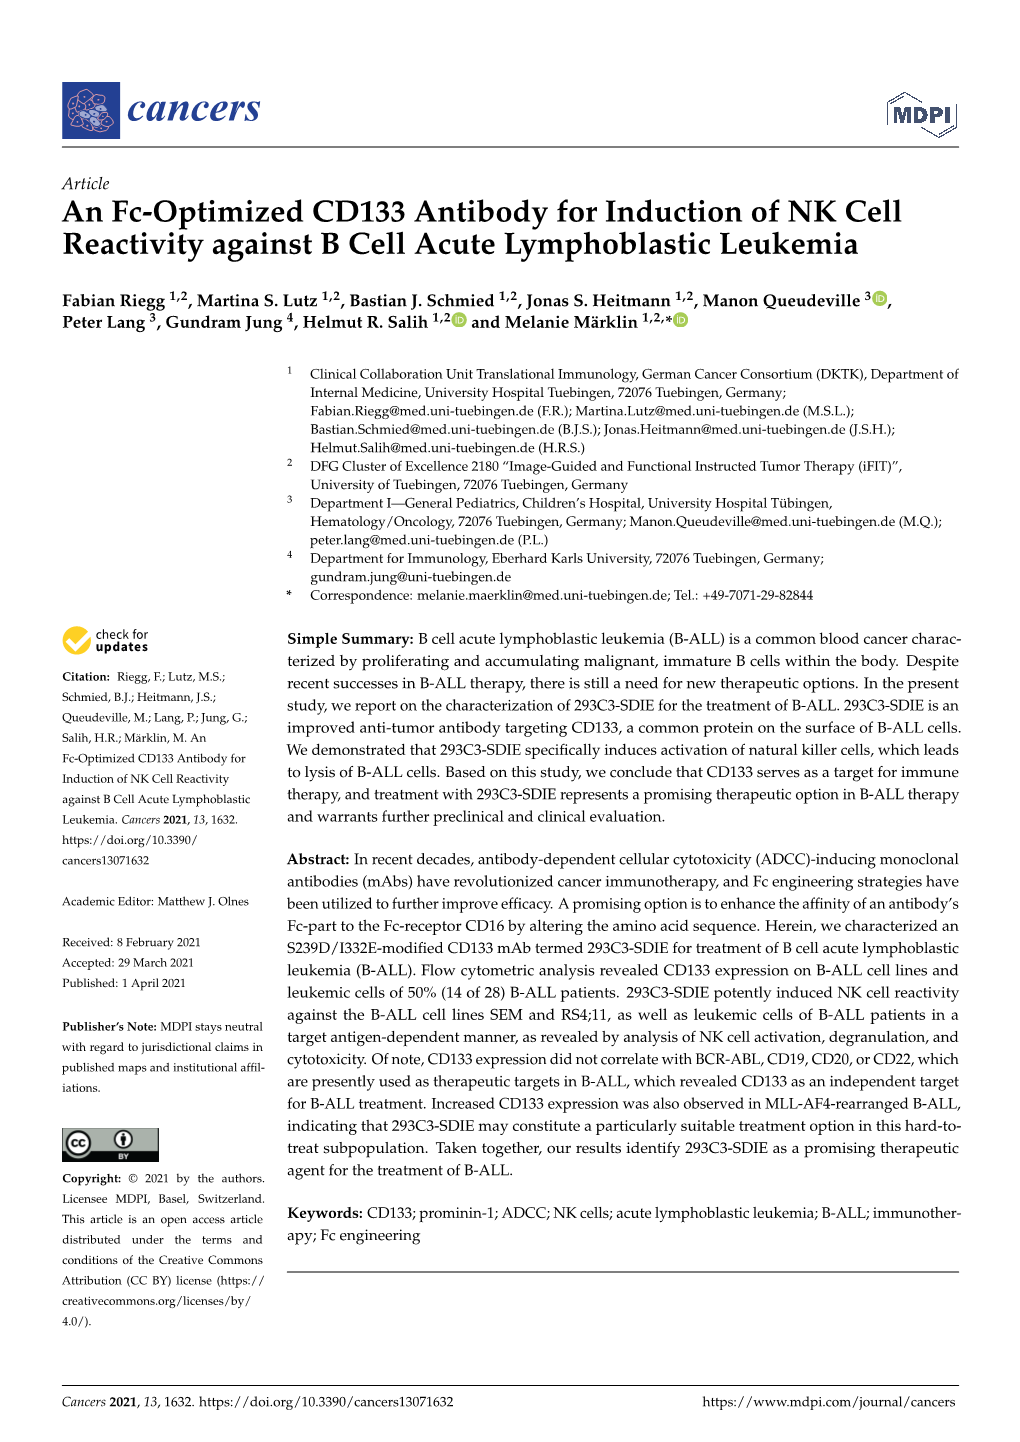 An Fc-Optimized CD133 Antibody for Induction of NK Cell Reactivity Against B Cell Acute Lymphoblastic Leukemia